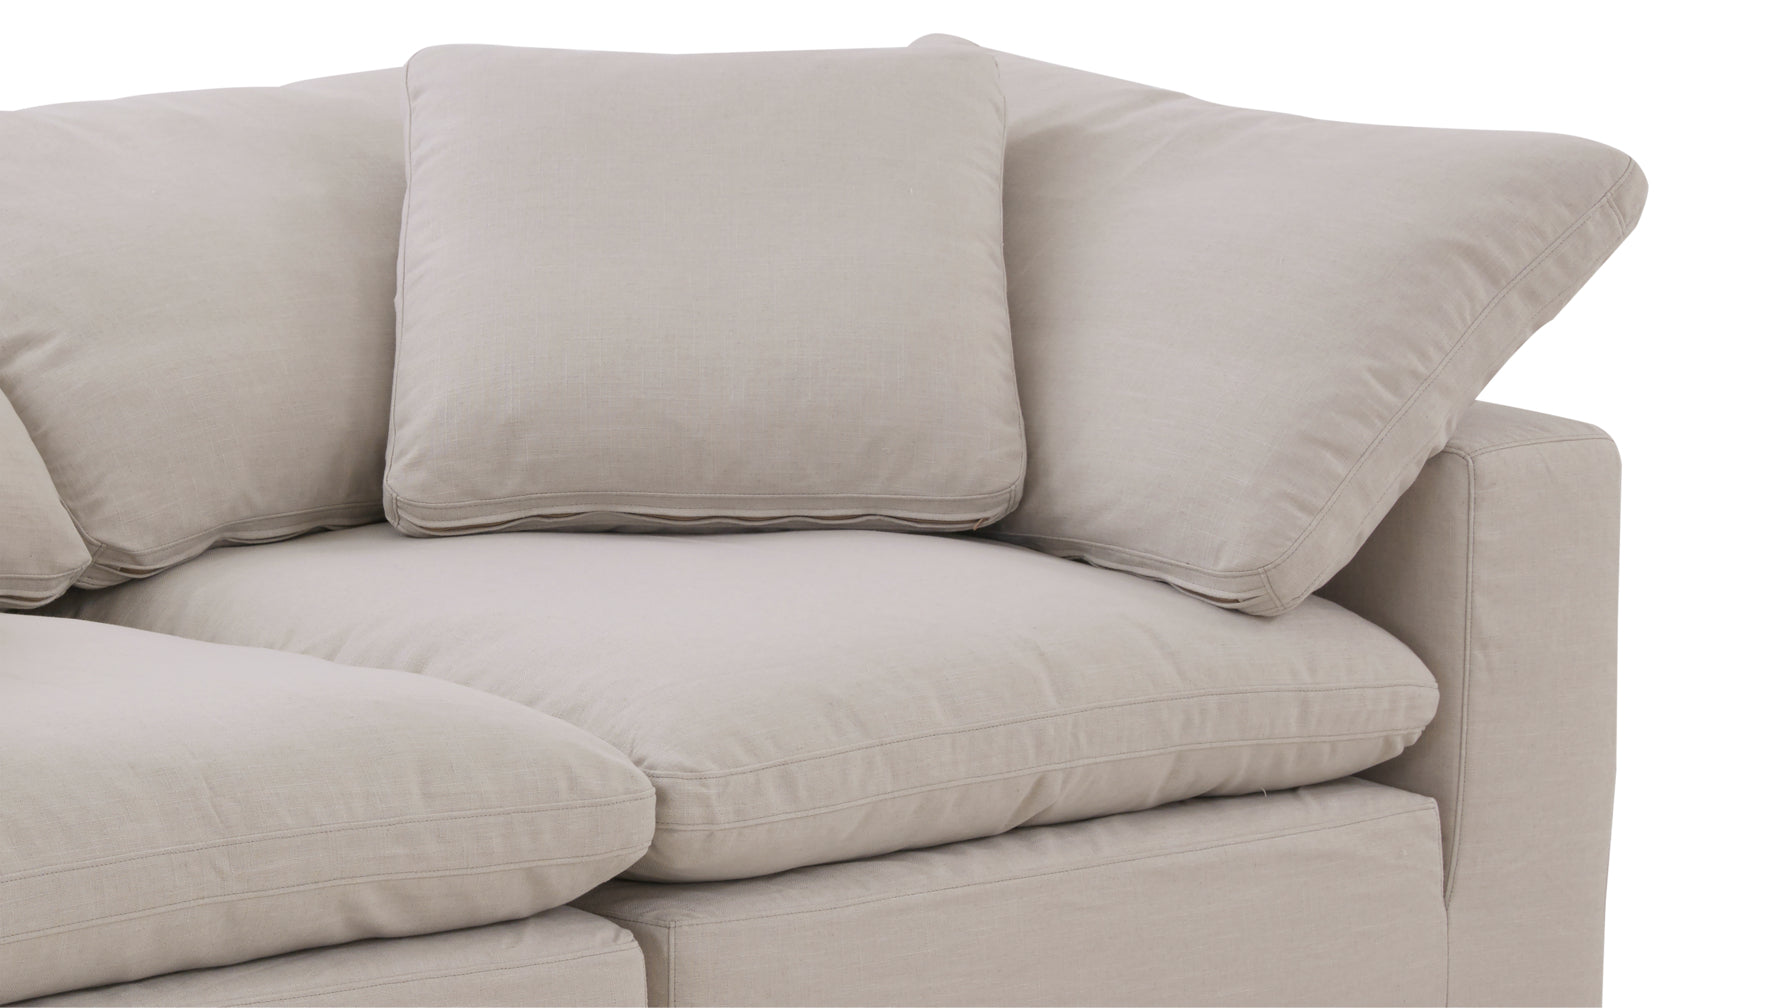 Movie Night™ 2-Piece Modular Sofa, Standard, Clay - Image 11